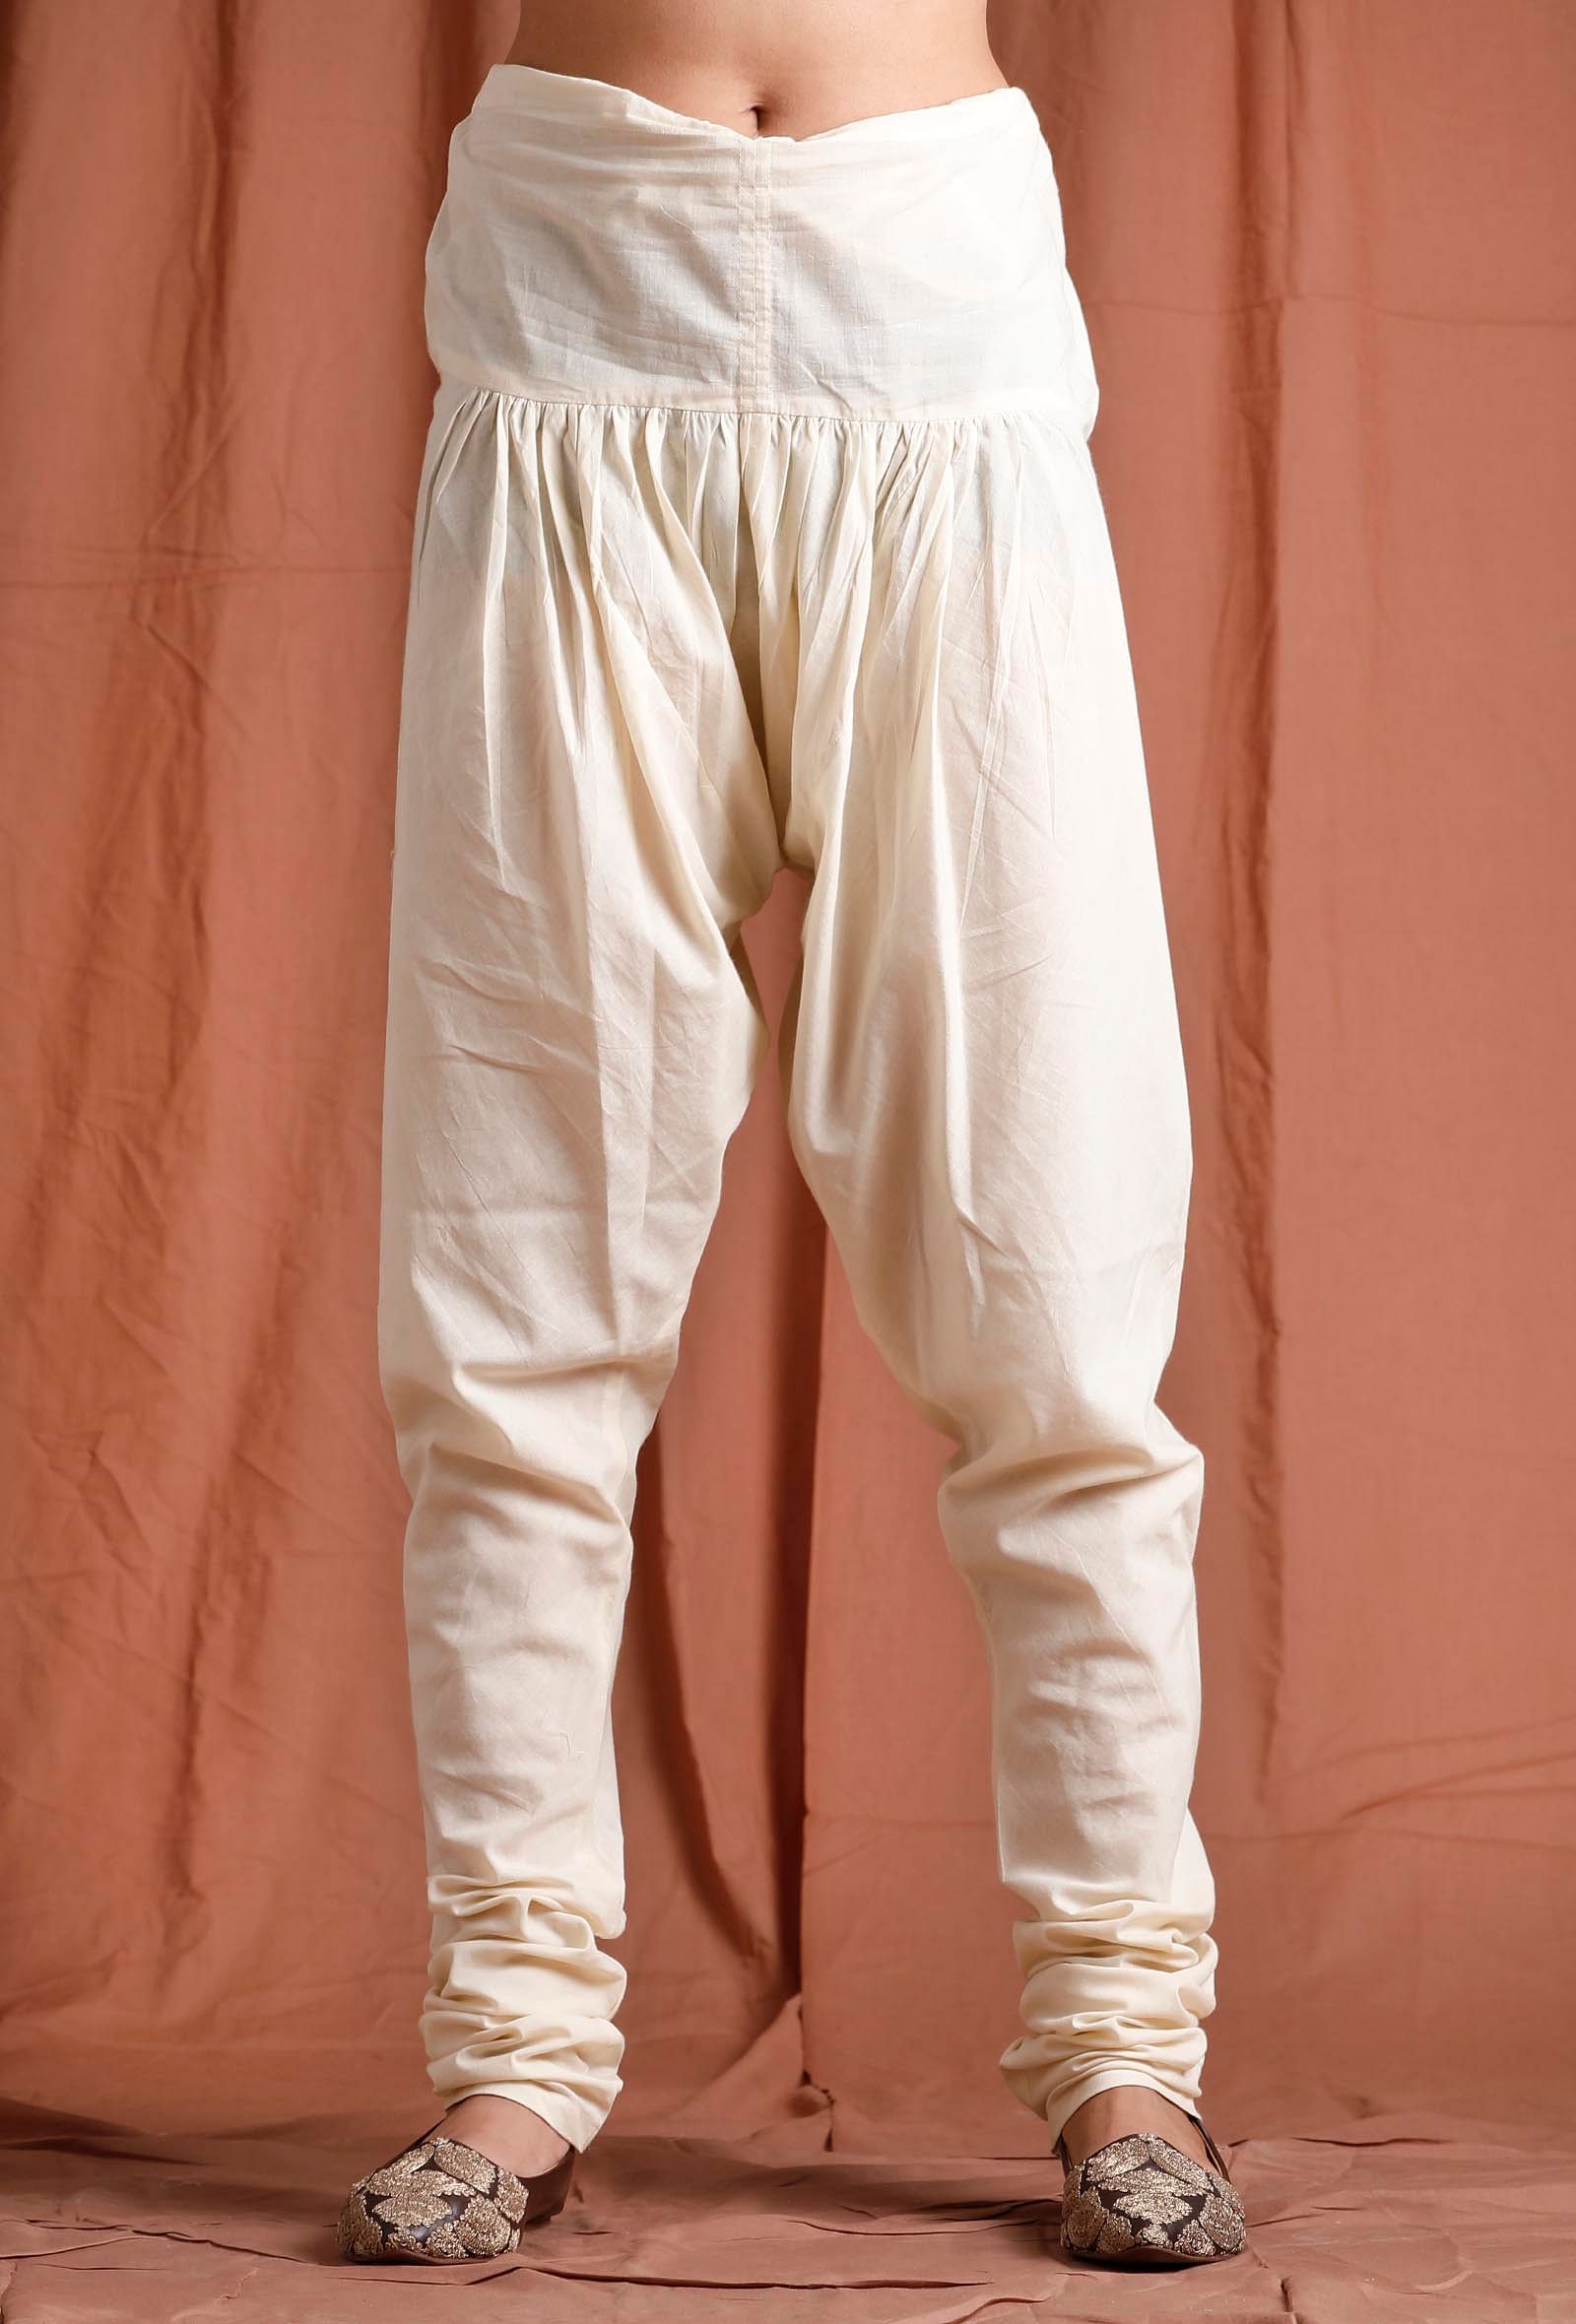 Buy Offwhite Pyjamas  Churidars for Men by Abhiyuthan Online  Ajiocom